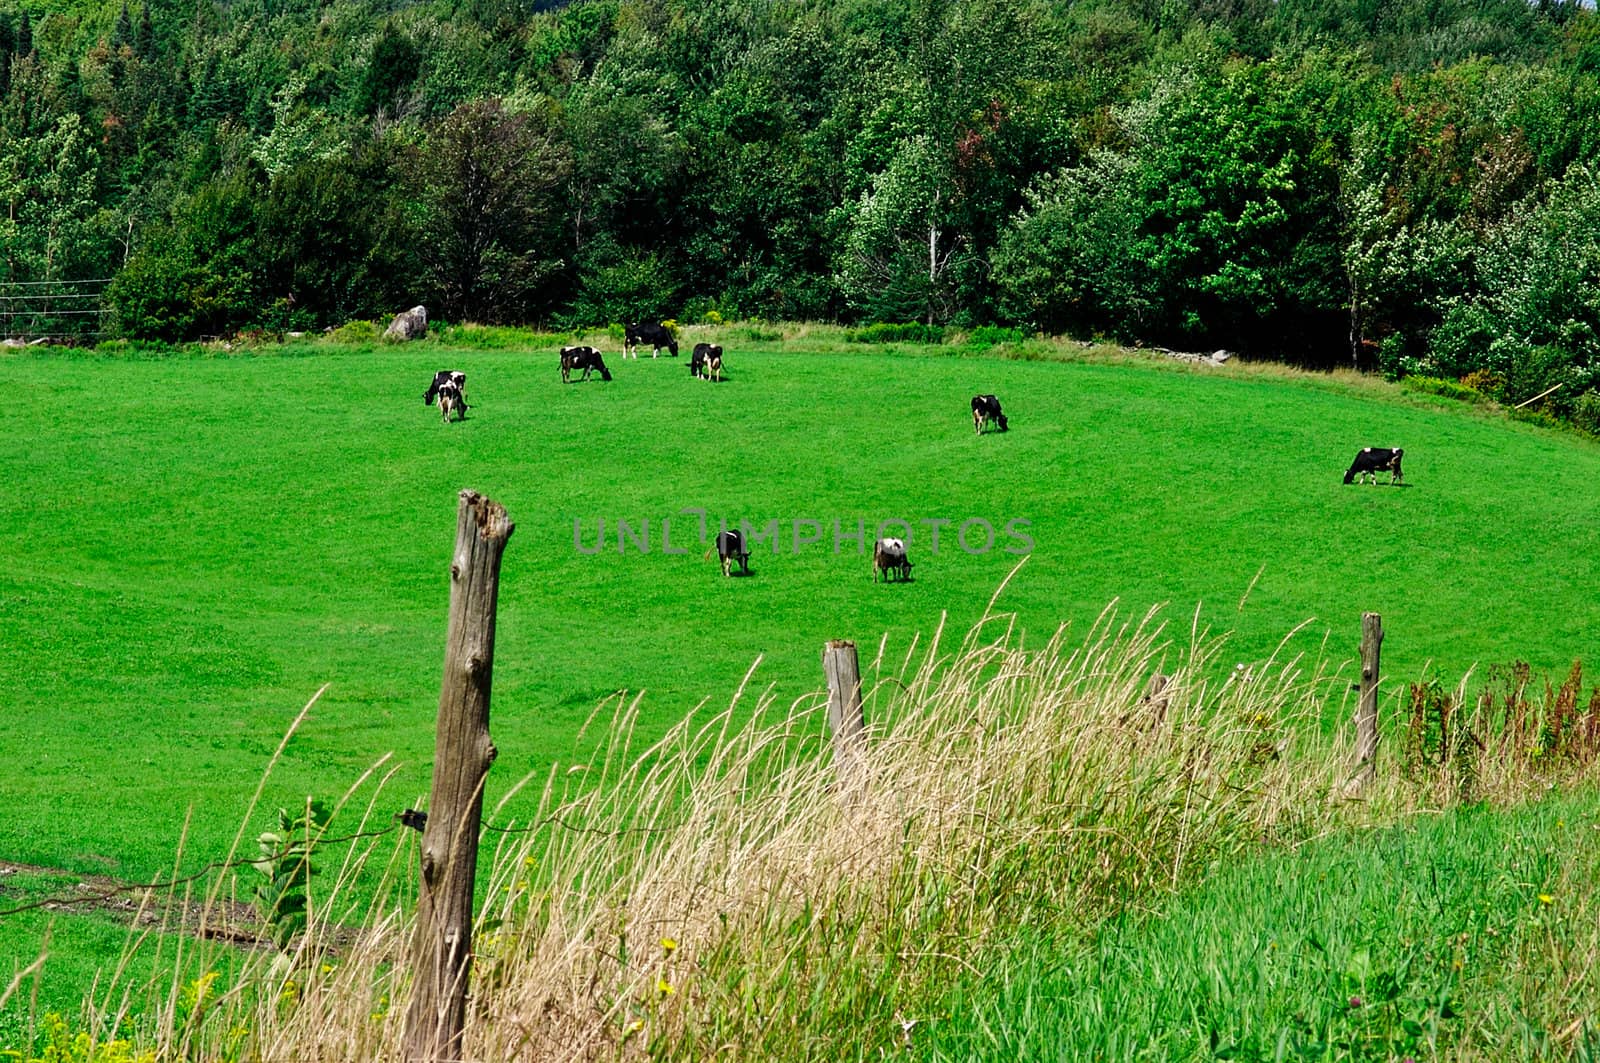 Cows enjoying their grass meal in a green field